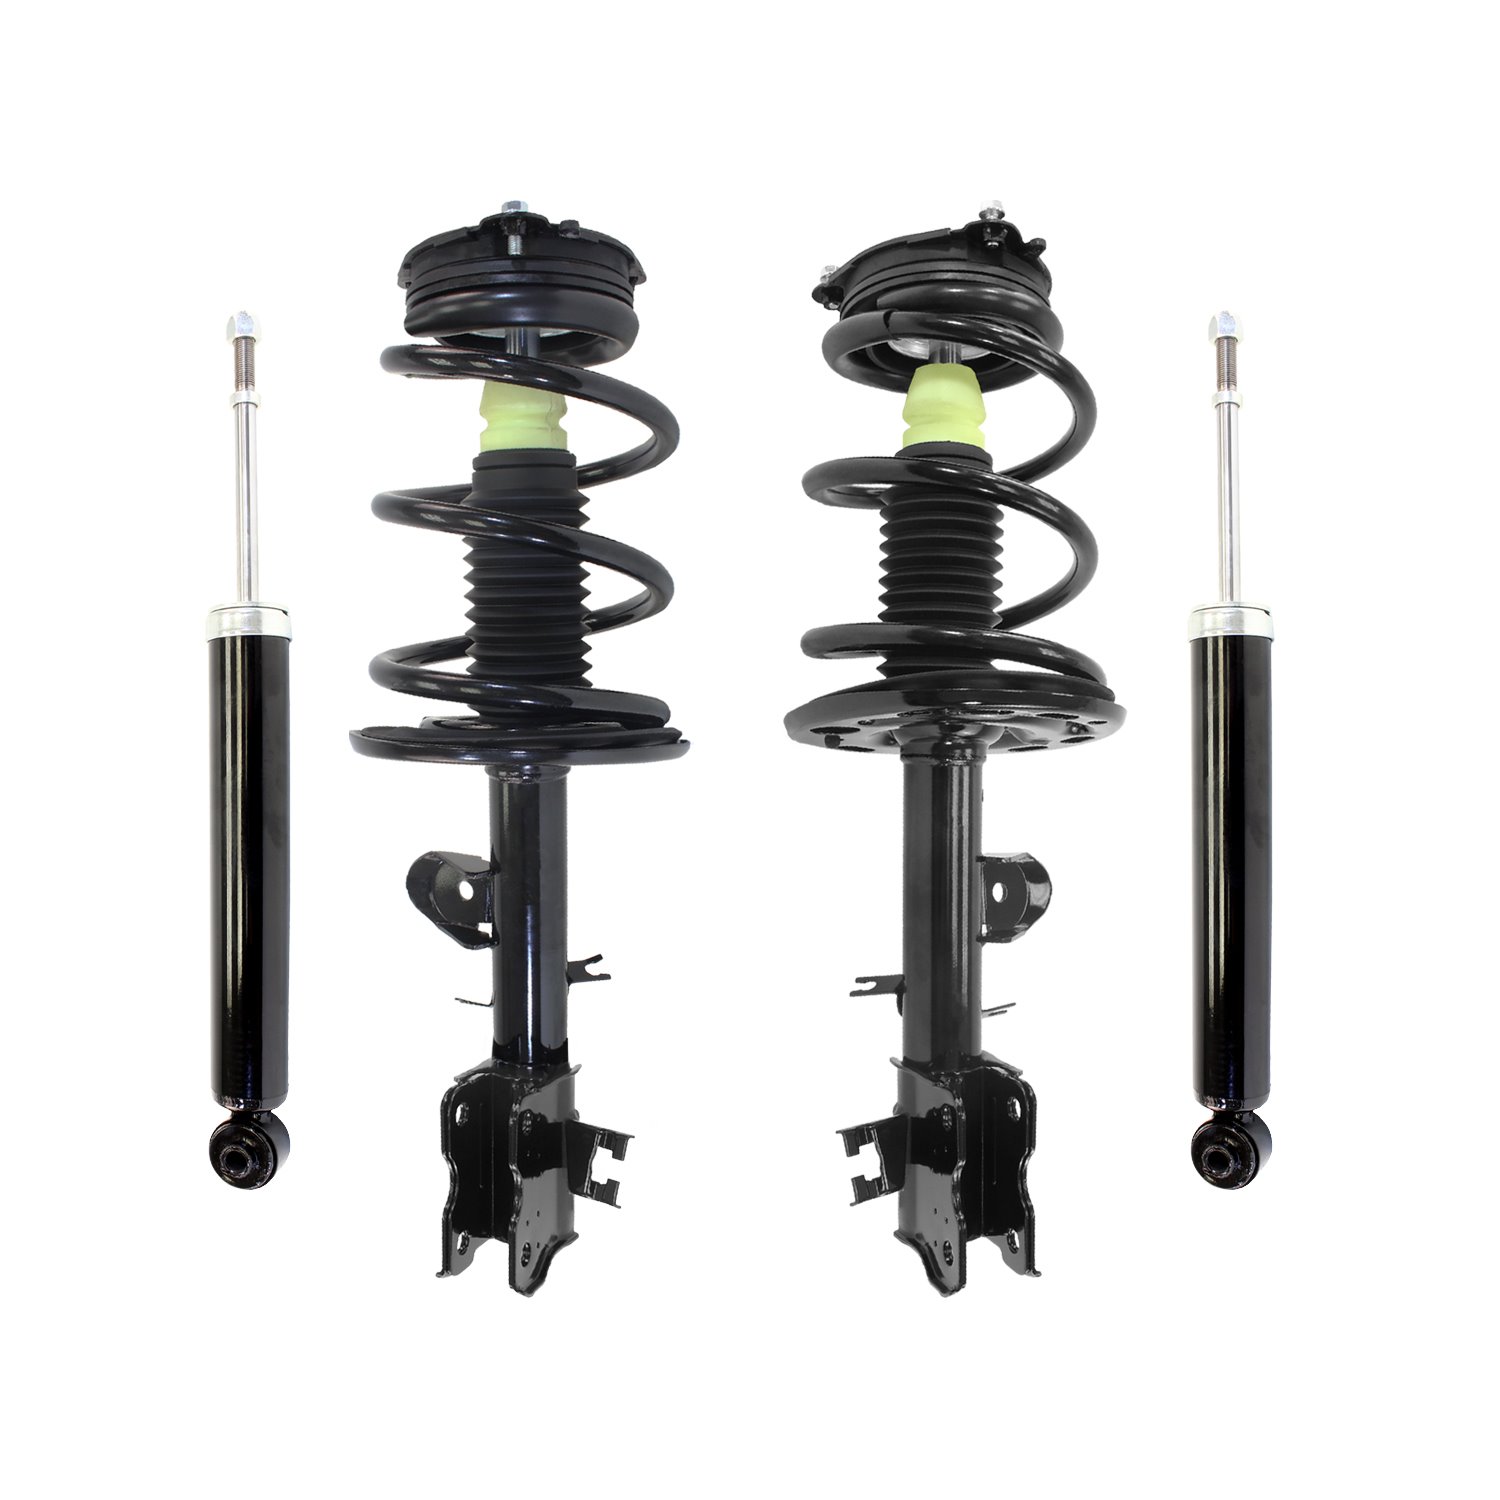 4-13651-255320-001 Front & Rear Complete Strut Assembly Shock Absorber Kit Fits Select Infiniti/Nissan